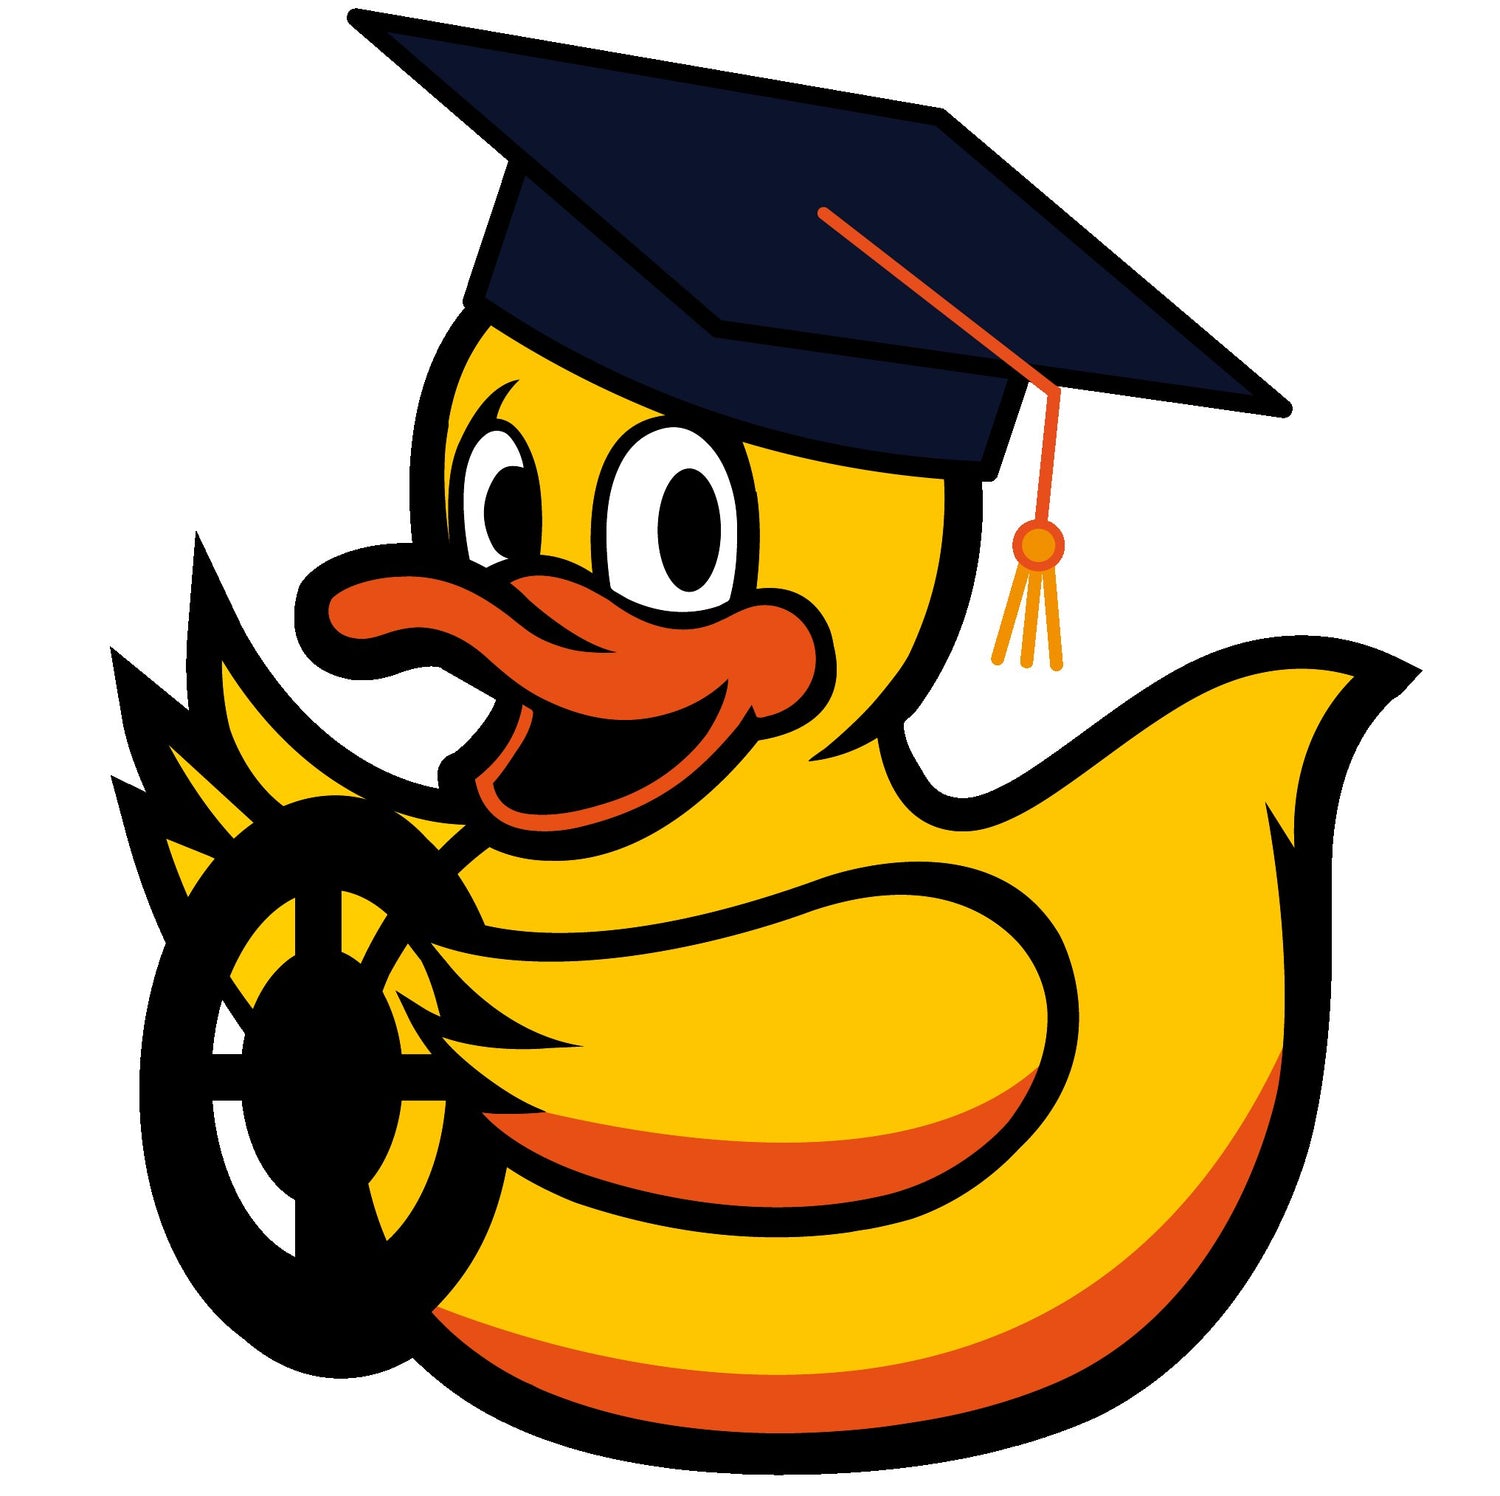 Duckietown logo with graduate cap